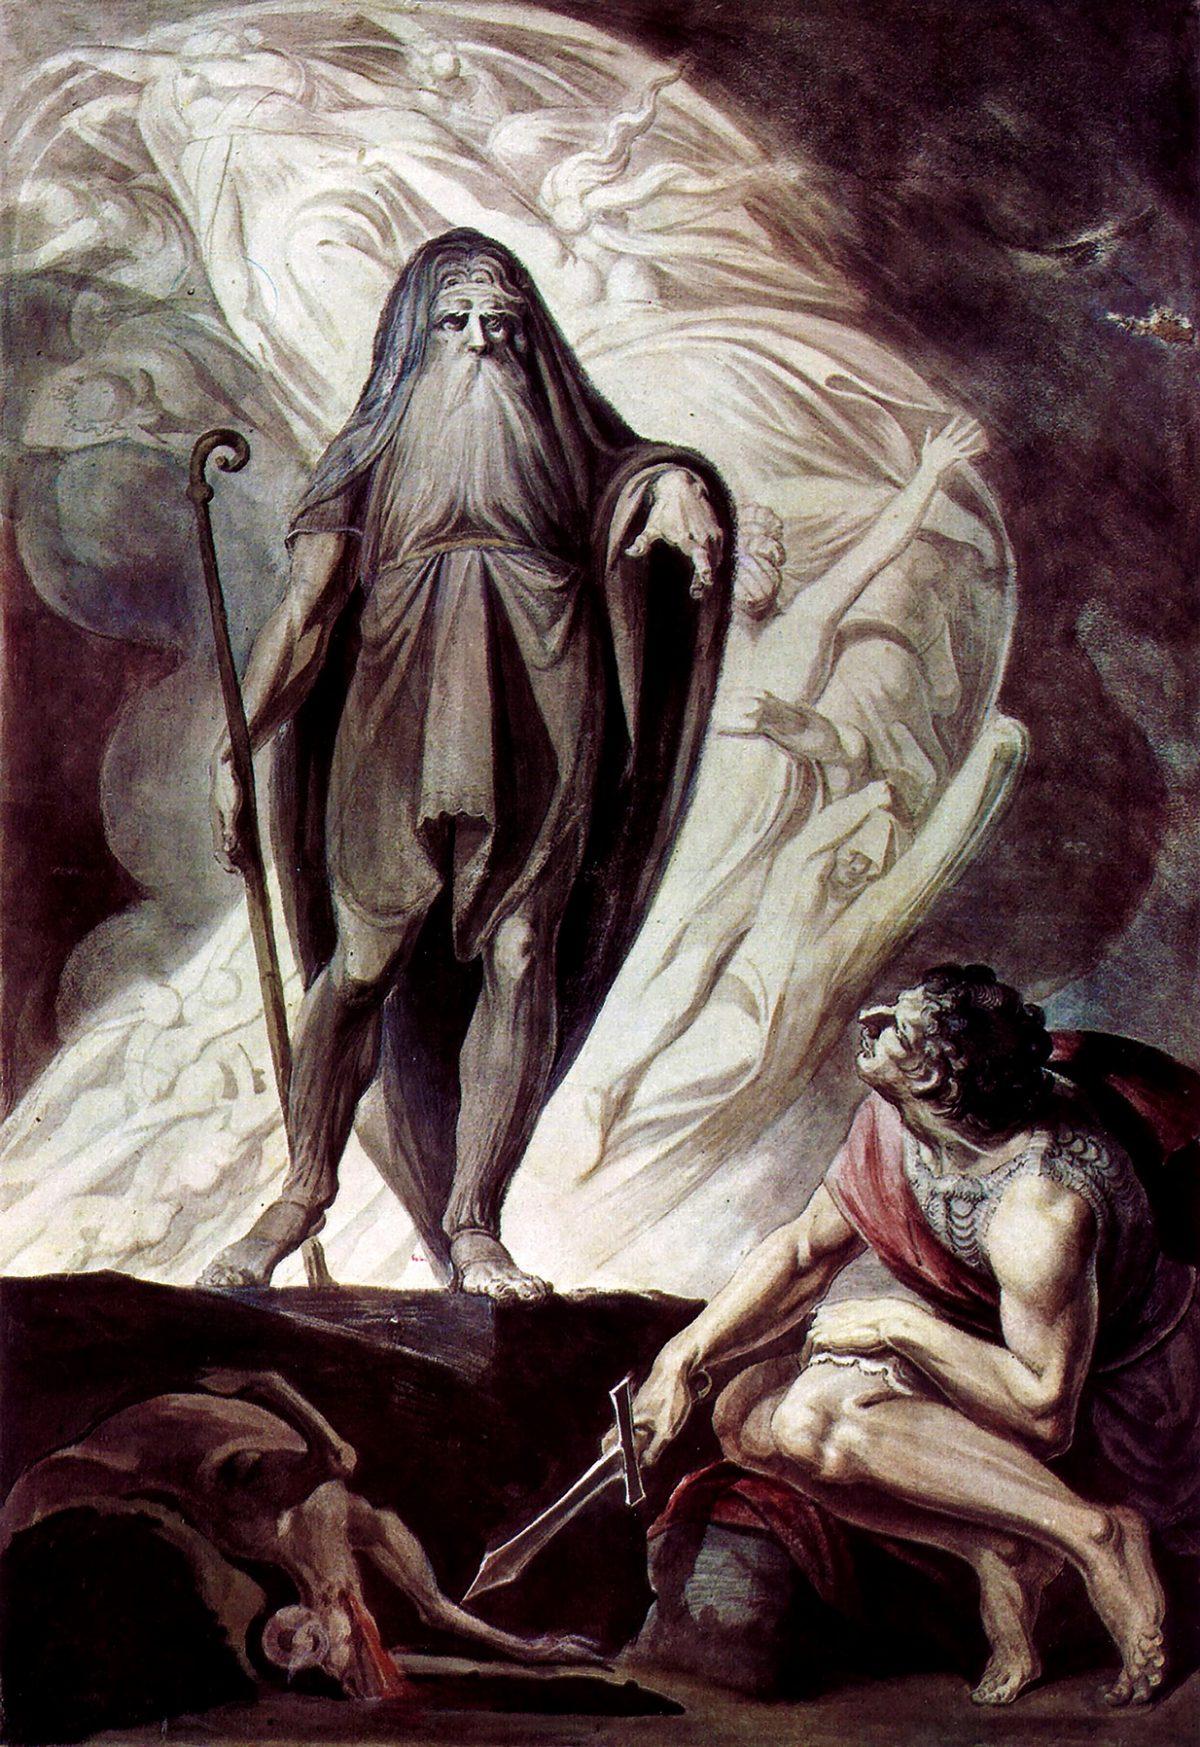 “The Shade of Tiresias Appearing to Odysseus During the Sacrifice,” circa 1780-85, by Johann Heinrich Füssli. (Public Domain)